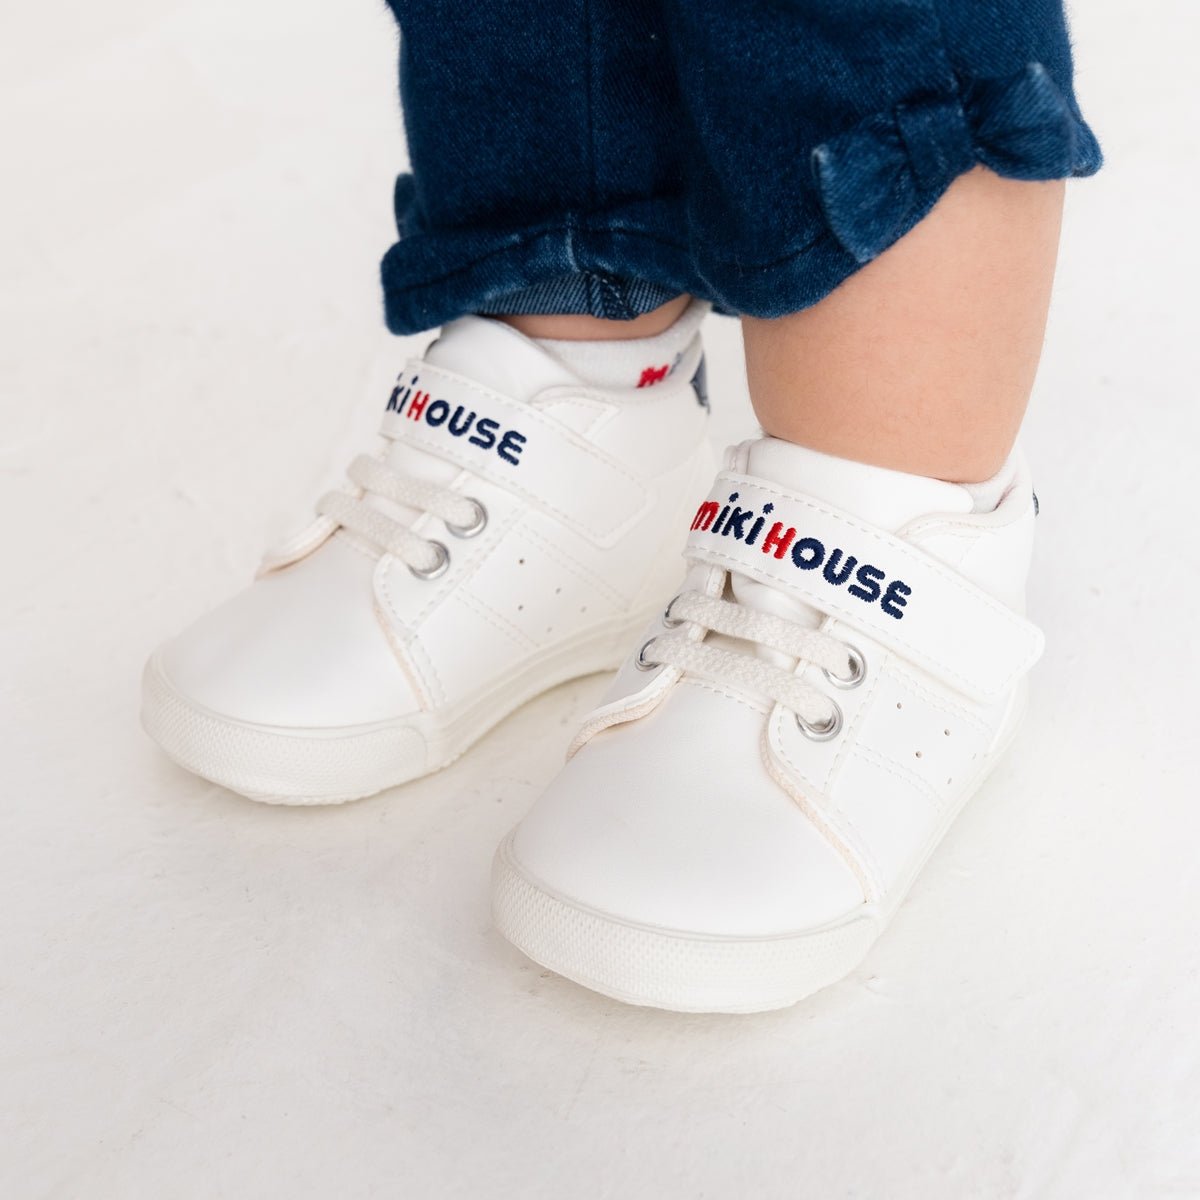 Fresh White Second Shoes - MIKI HOUSE USA